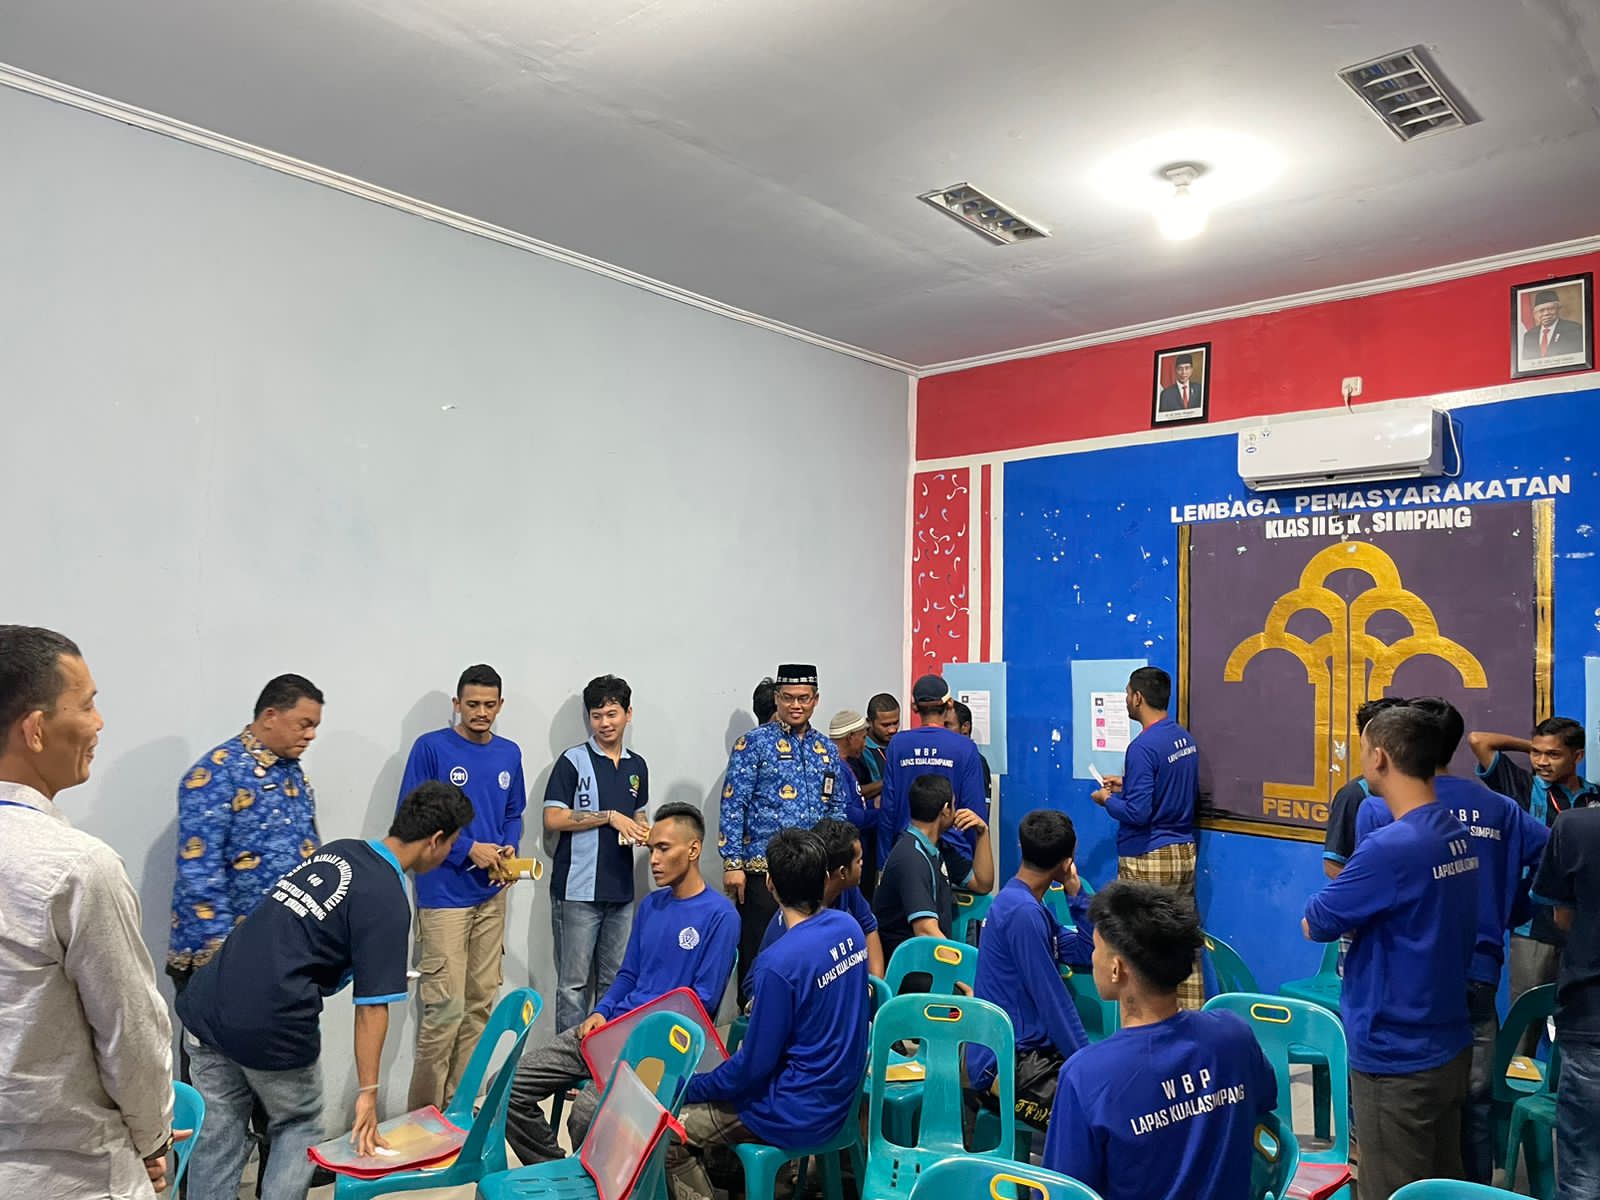 23 WBP Lapas Kelas IIB Kuala Simpang, Mengikuti Kegiatan Sekolah Kejar Paket Oleh Dinas Pendidikan Aceh Tamiang